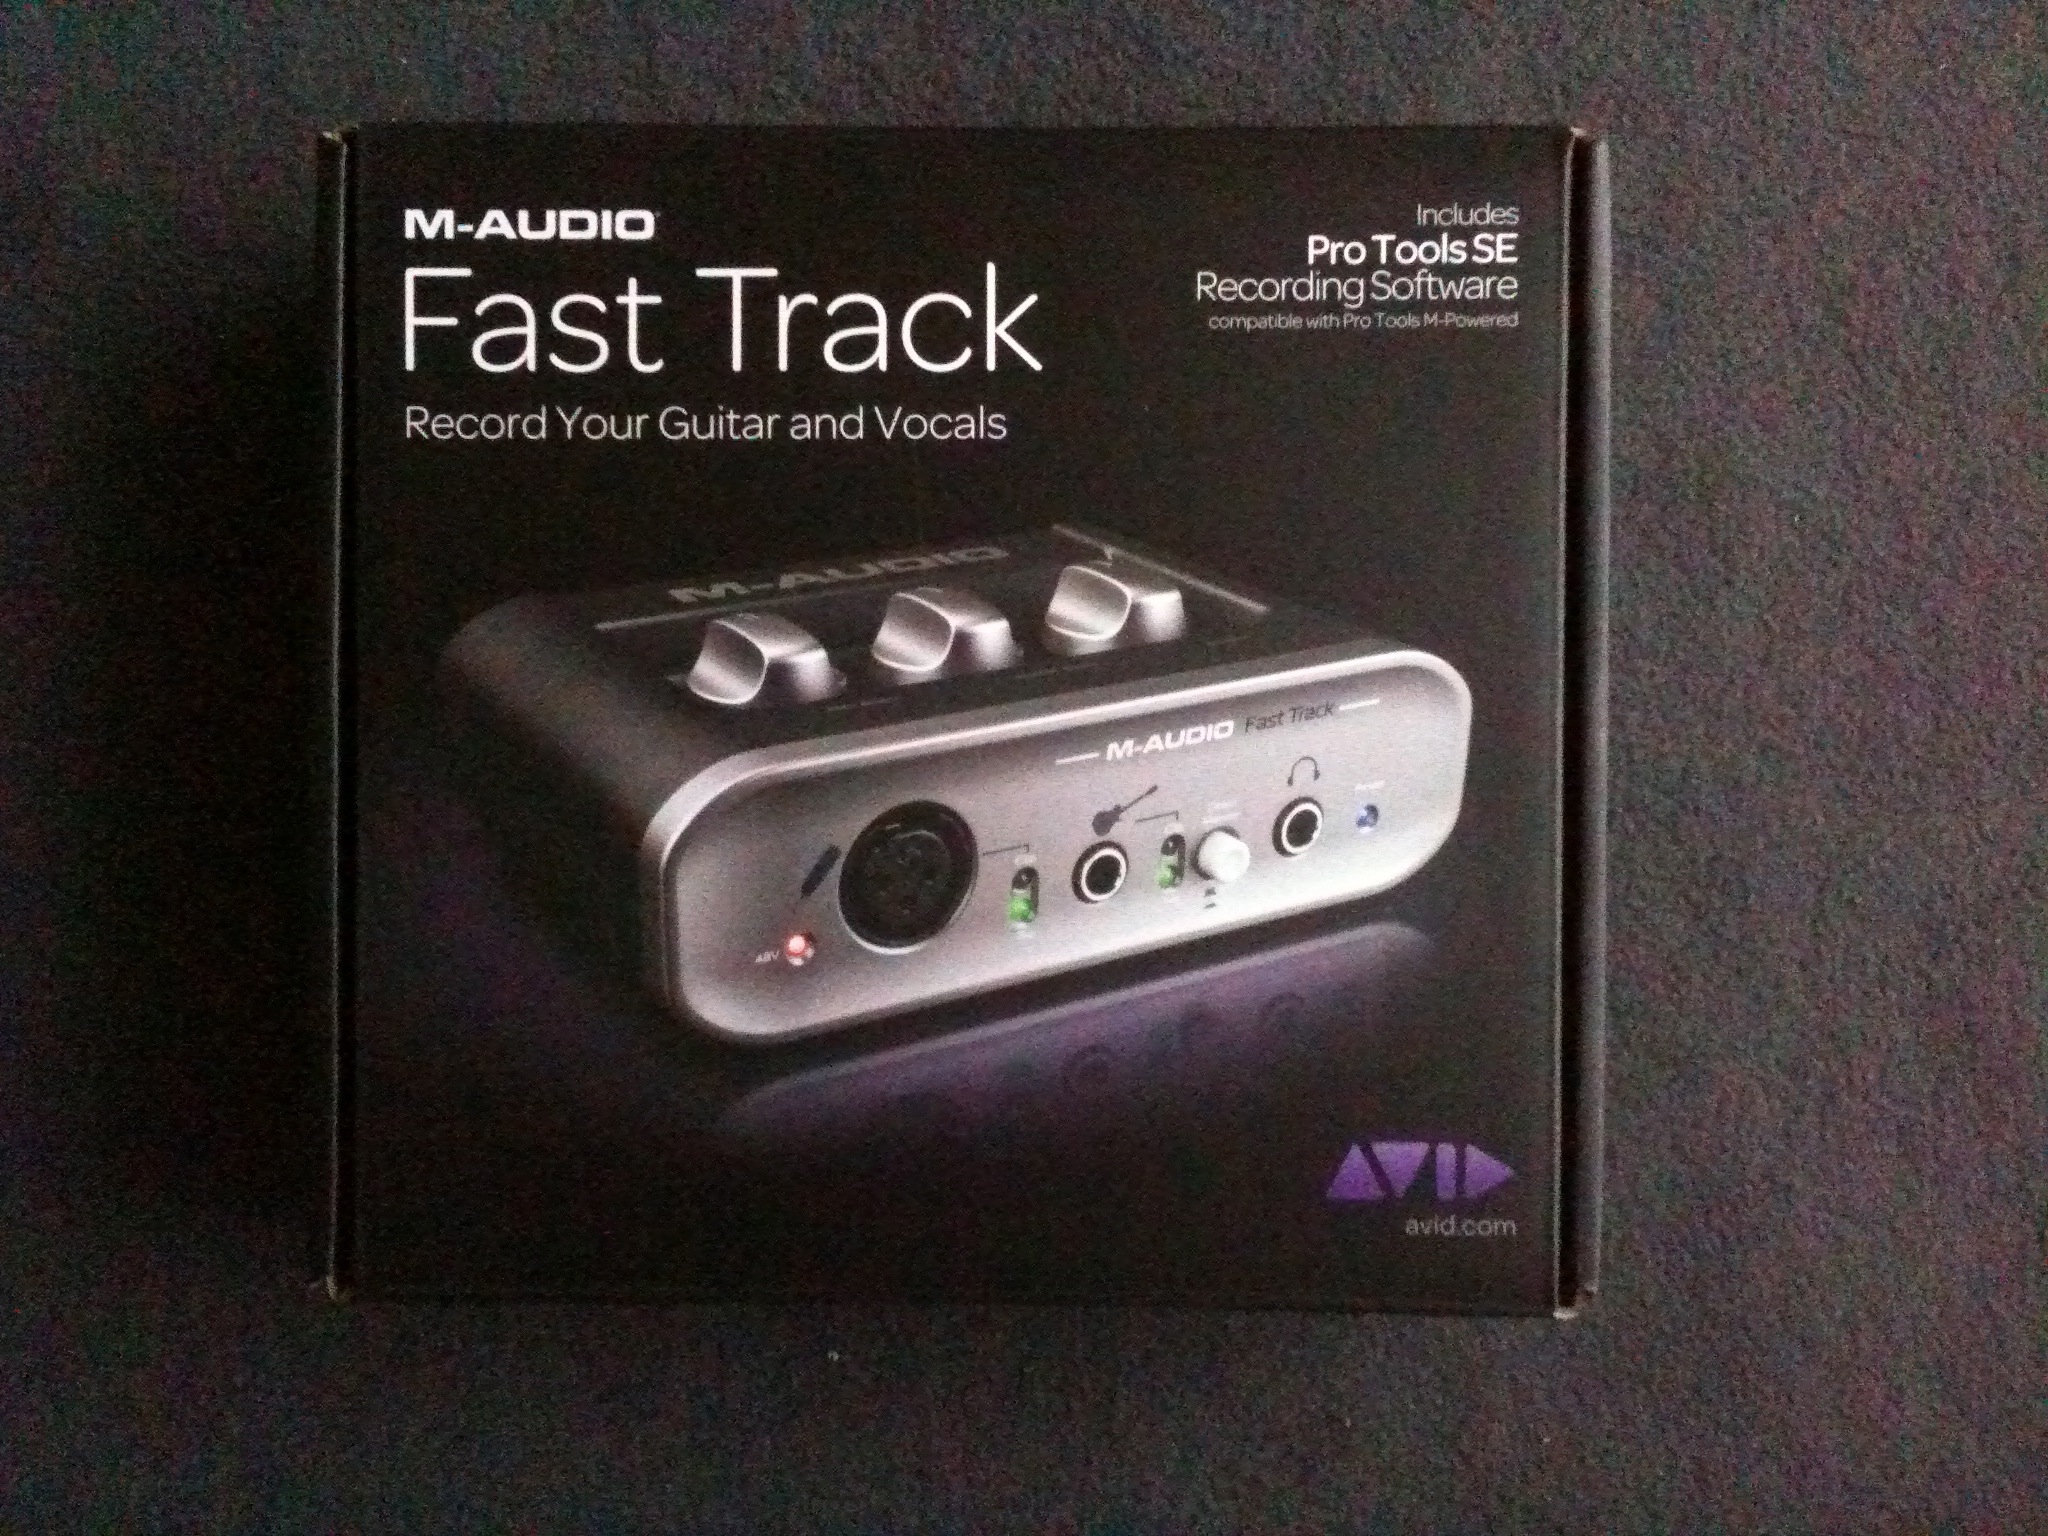 m audio fast track ultra driver windows 10